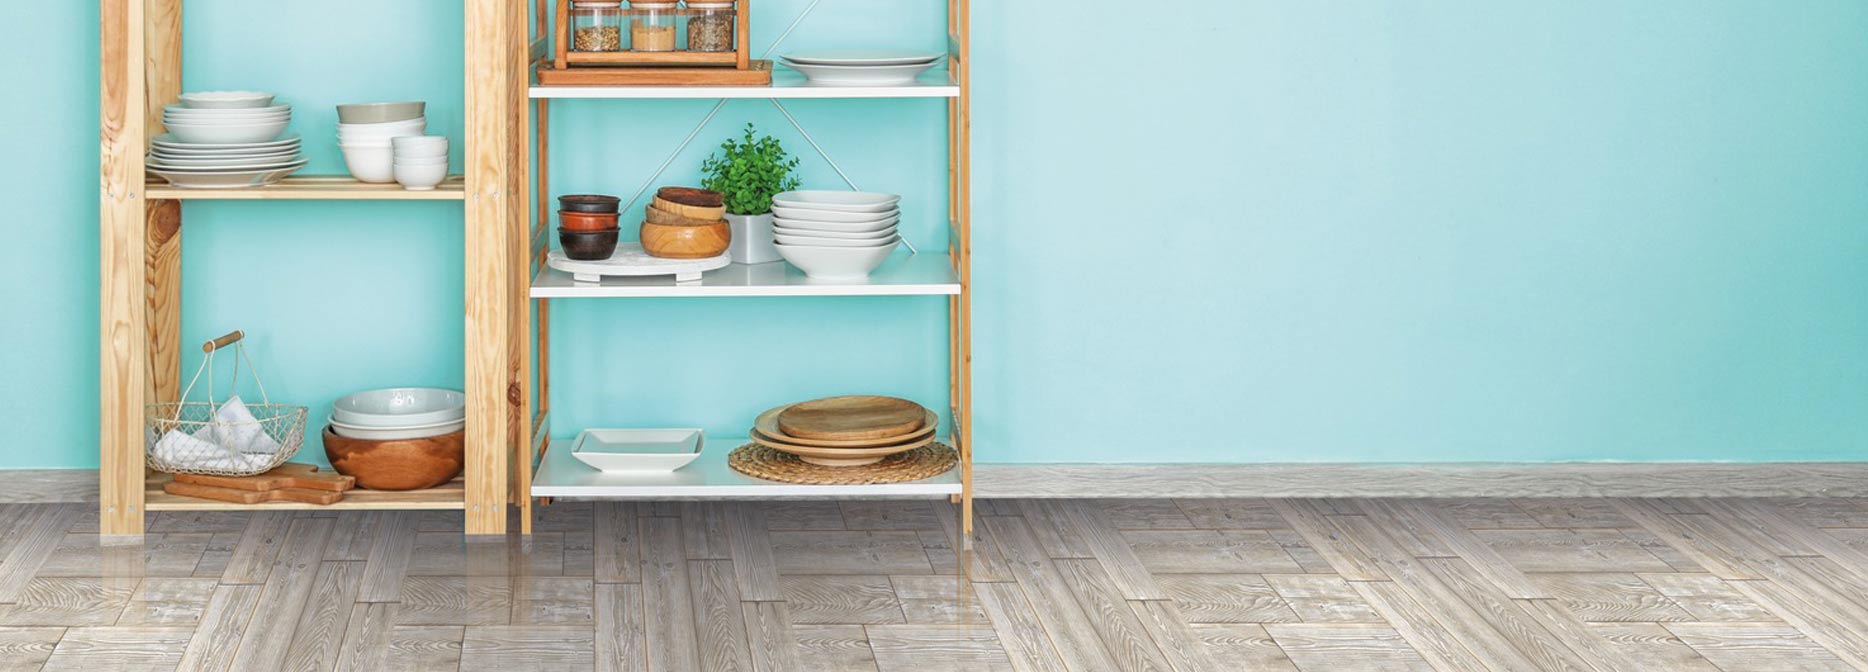 rustic oak self-adhesive vinyl floor tiles in room with mint walls and kitchen shelves unit - shop floor tiles